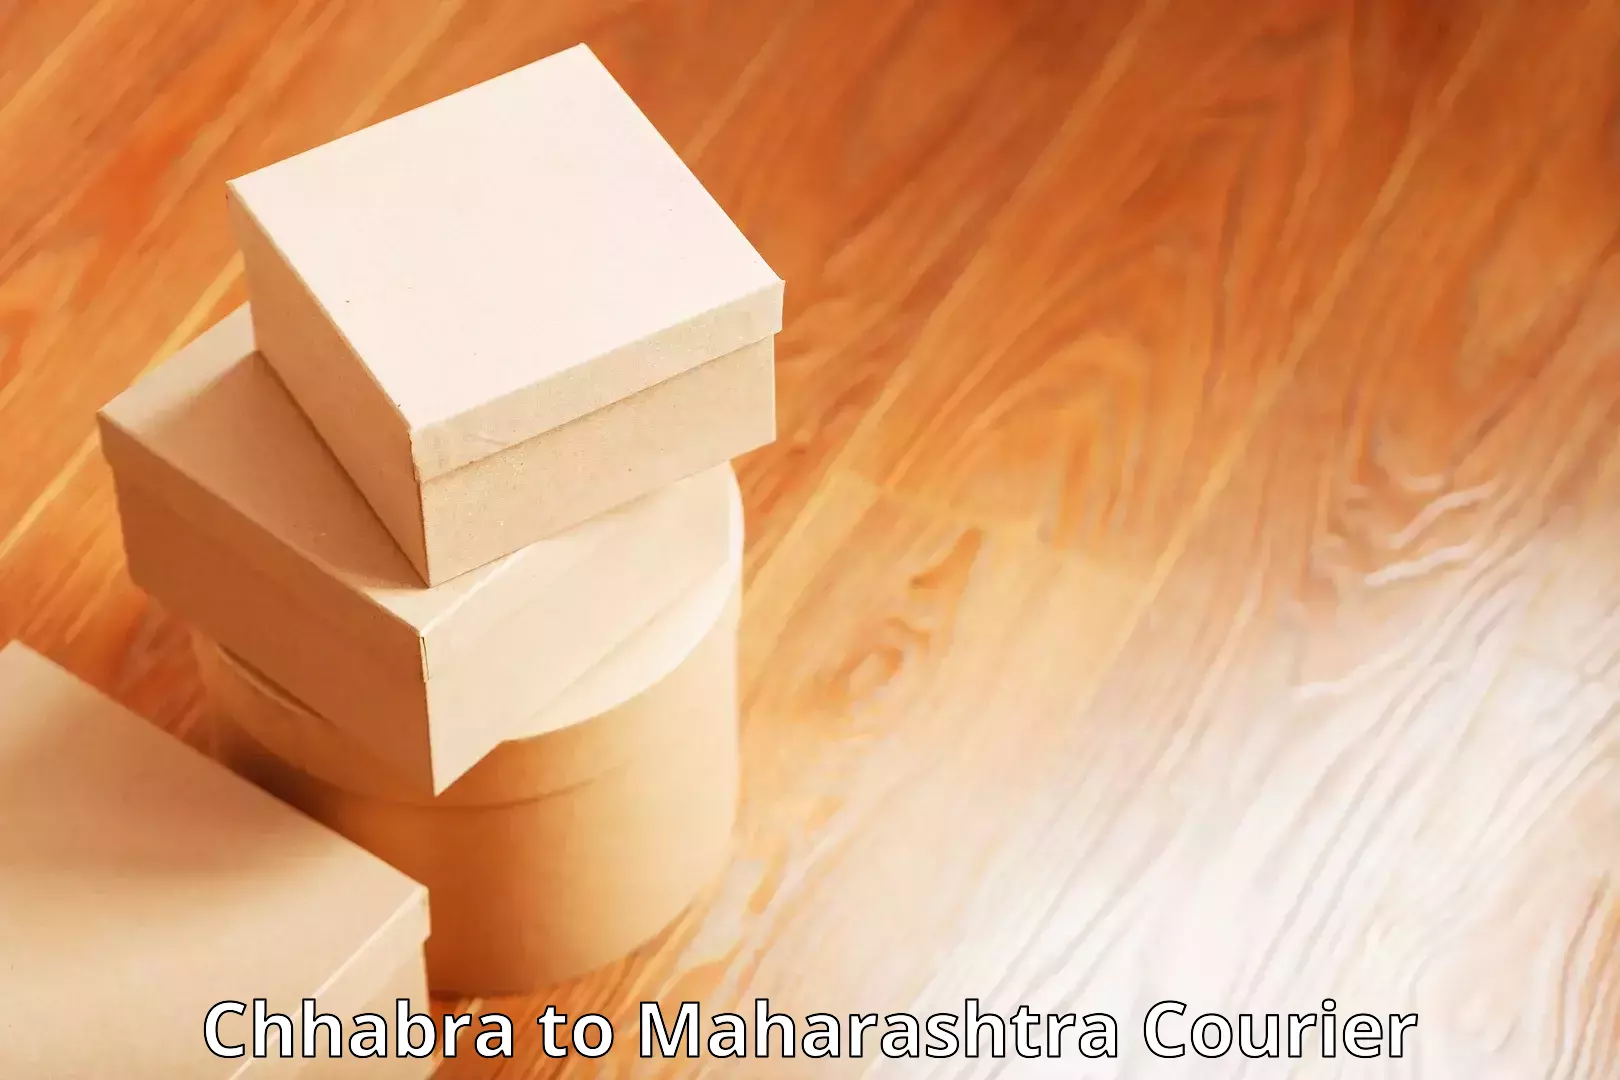 Smart shipping technology Chhabra to Maharashtra